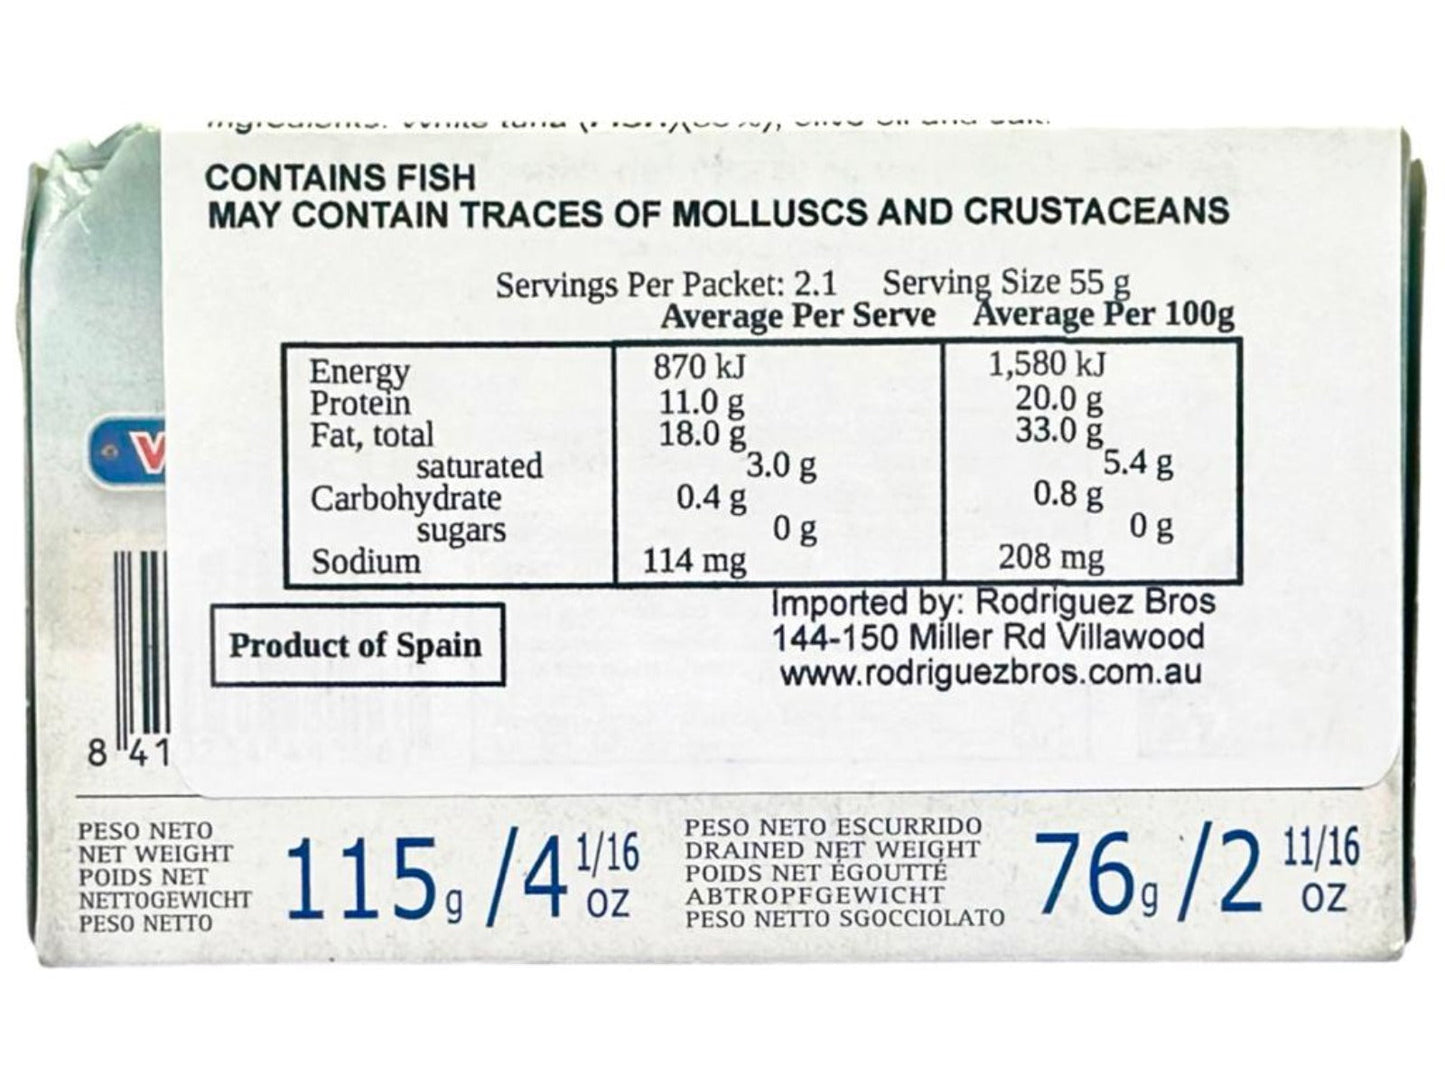 Vigilante Bonito del Norte en Aceite de Oliva - Spanish White Tuna in Olive Oil 115g - 4 Pack Total 460g Best Before Jan 2029